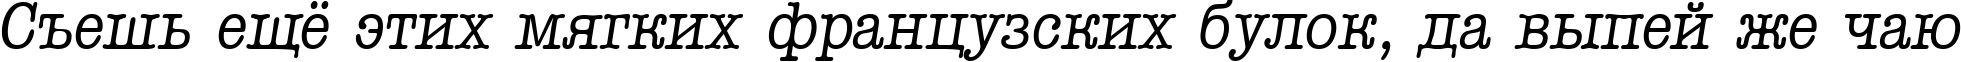 Пример написания шрифтом a_OldTyperNr Italic текста на русском